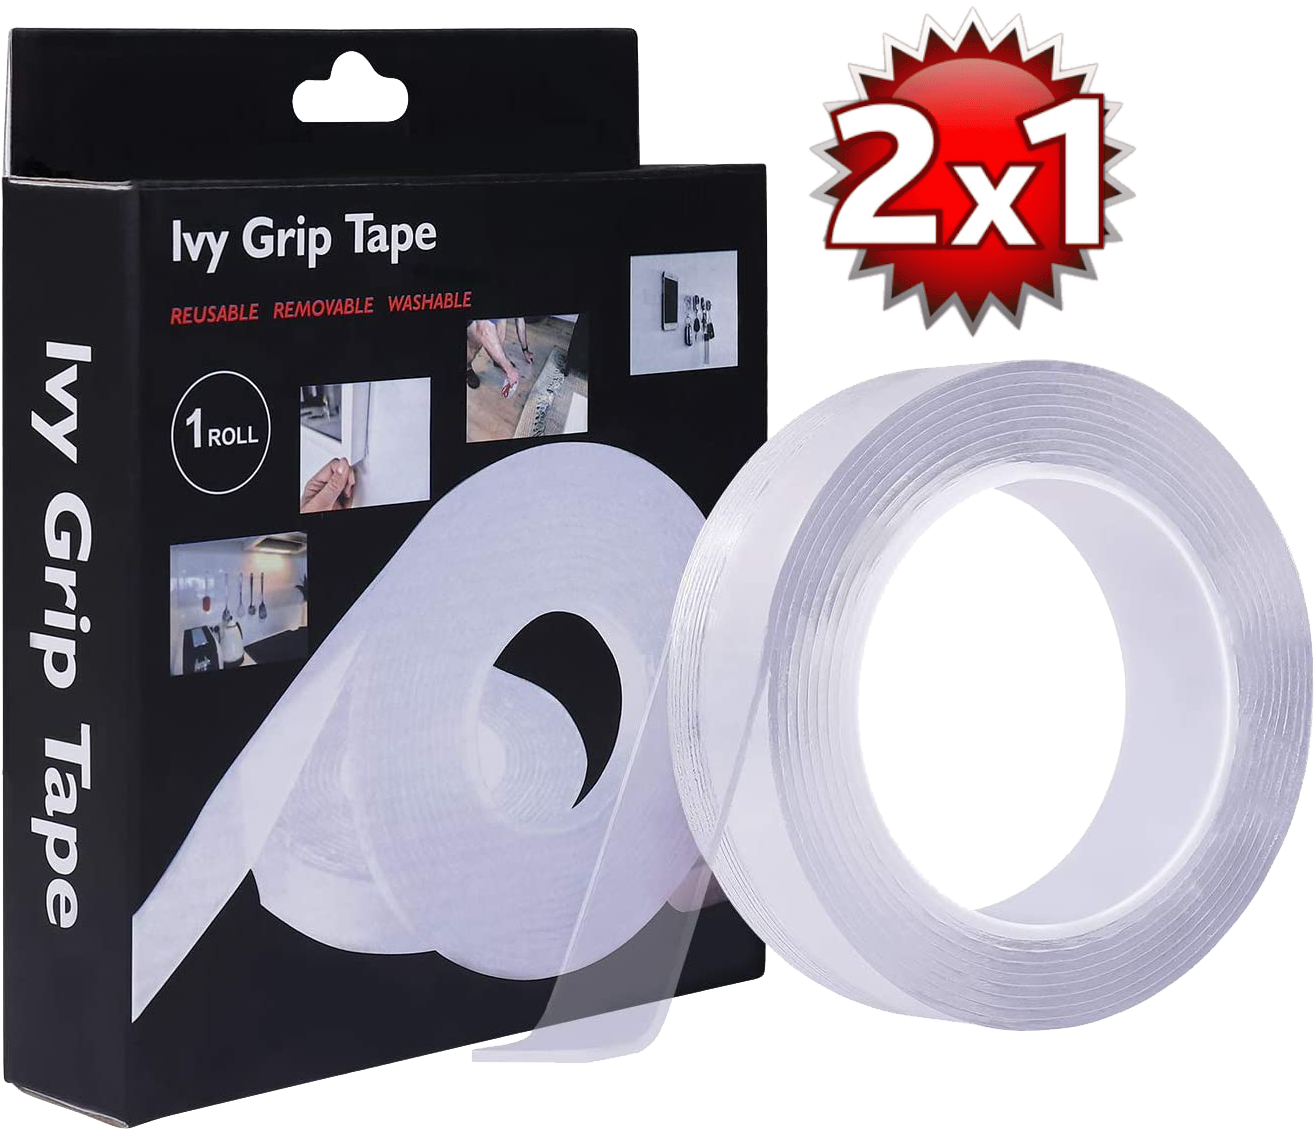 Ivy Grip Tape caratteristiche